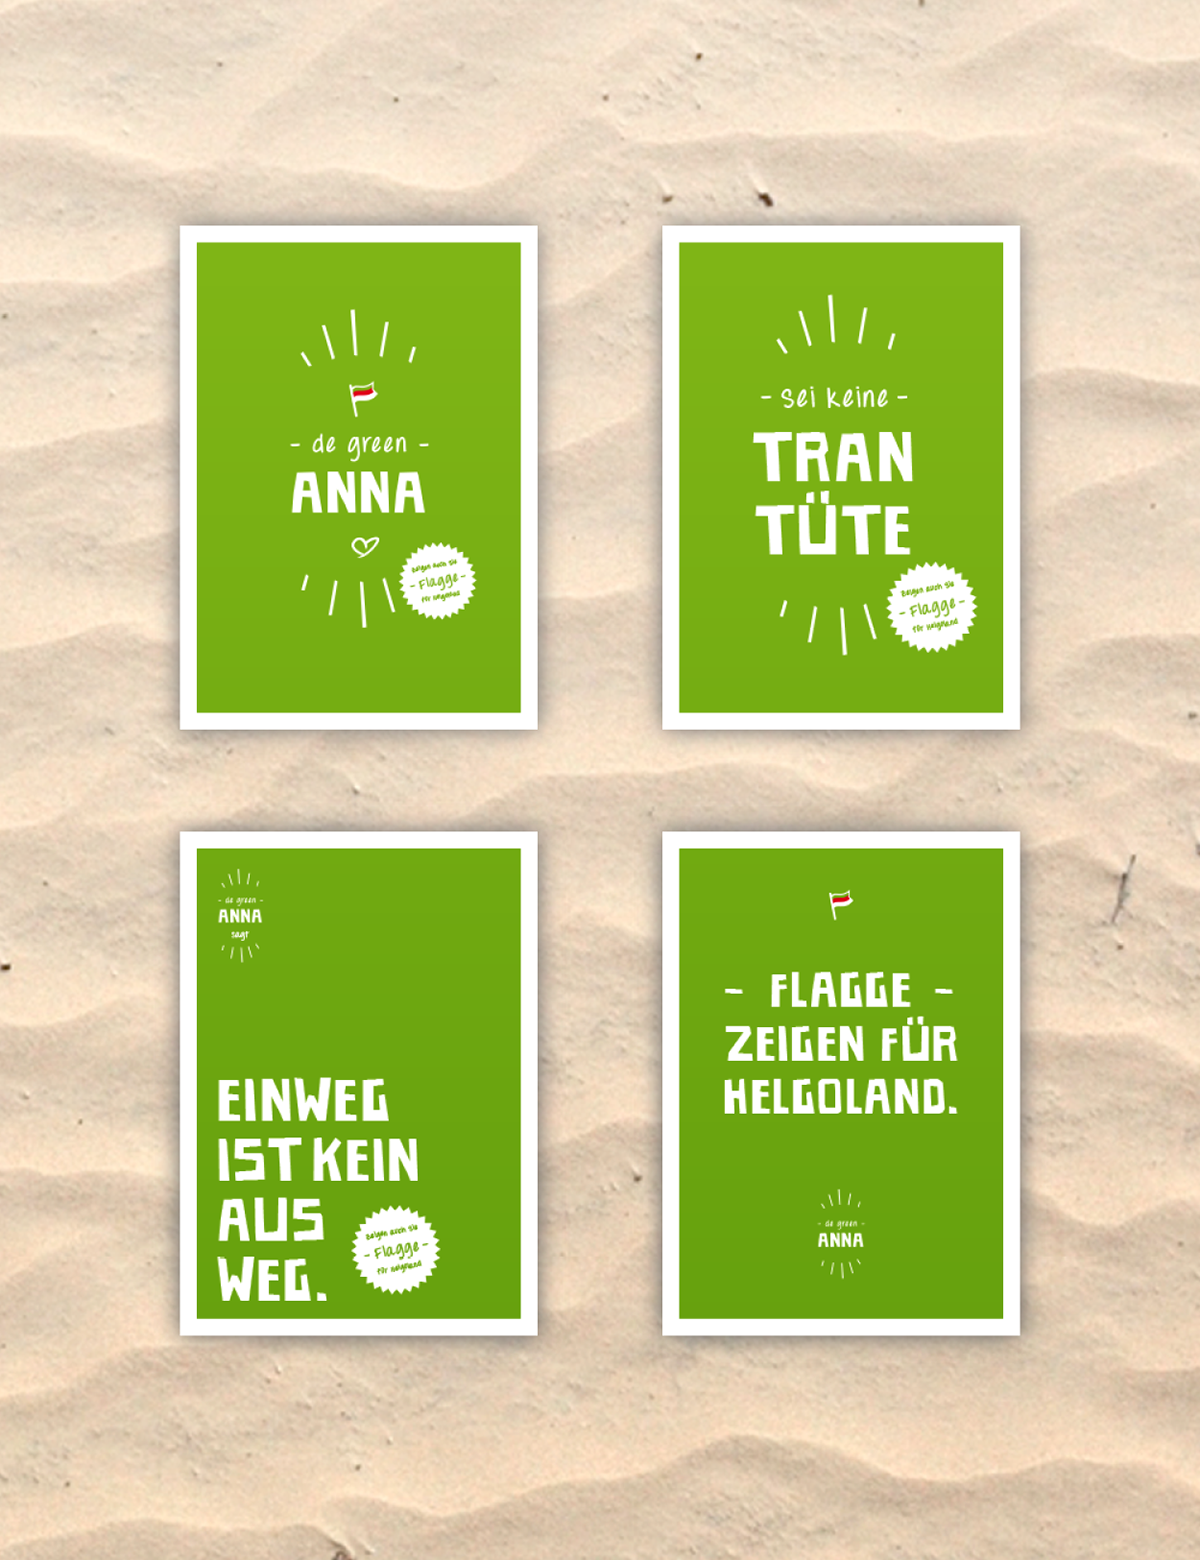 plastikmüll Müllvermeidung grün Meer Helgoland Kampagne design logo recycling upcycling